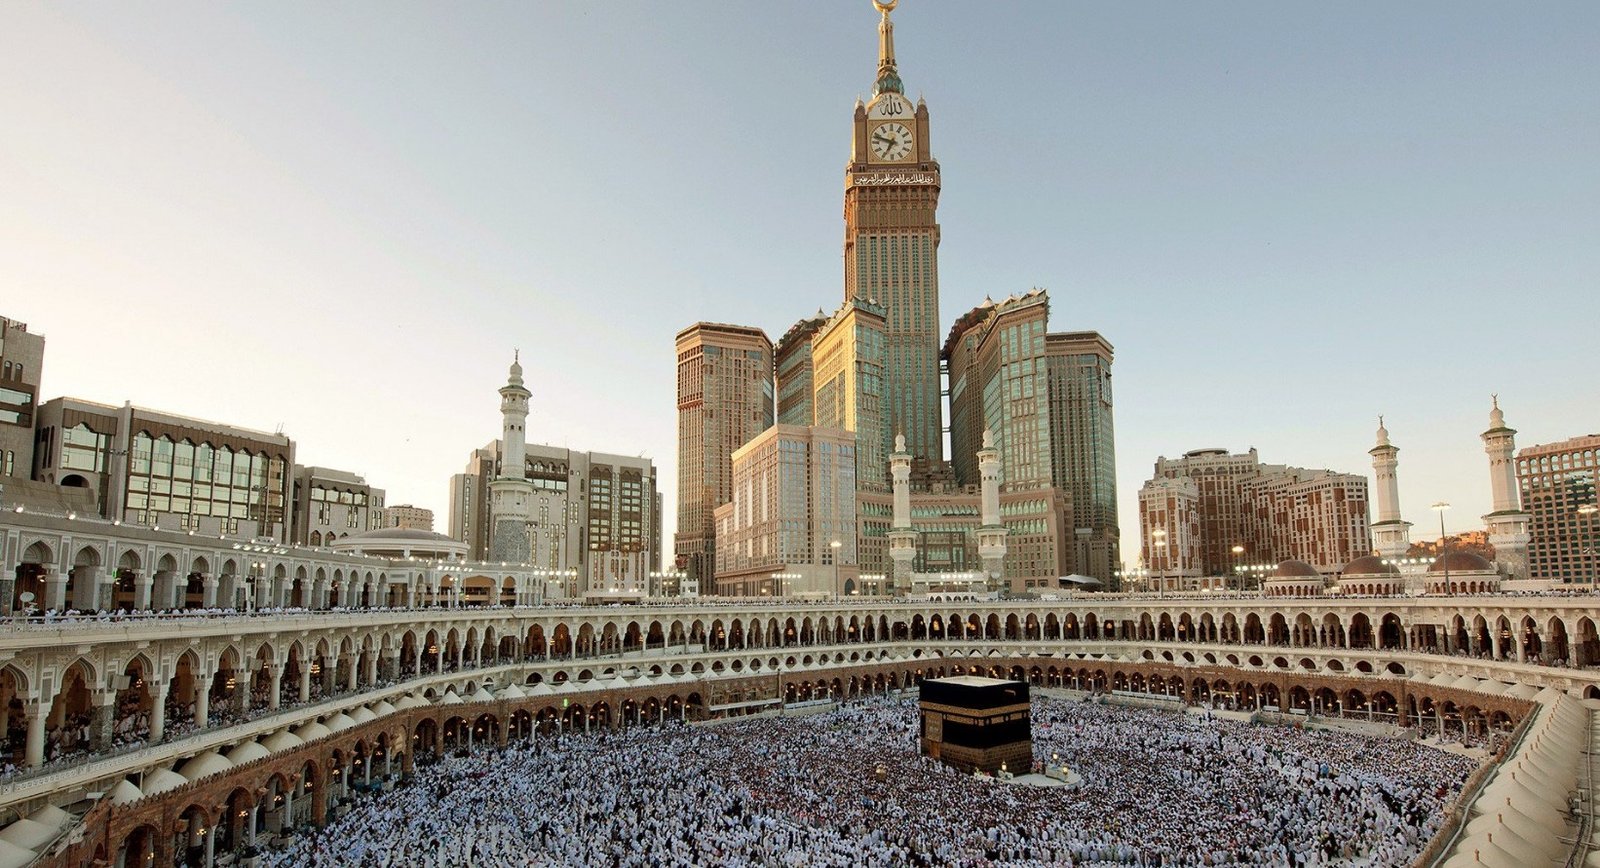 Royal Clock Tower Mecca Saudi Arabia tallest building travelhyme